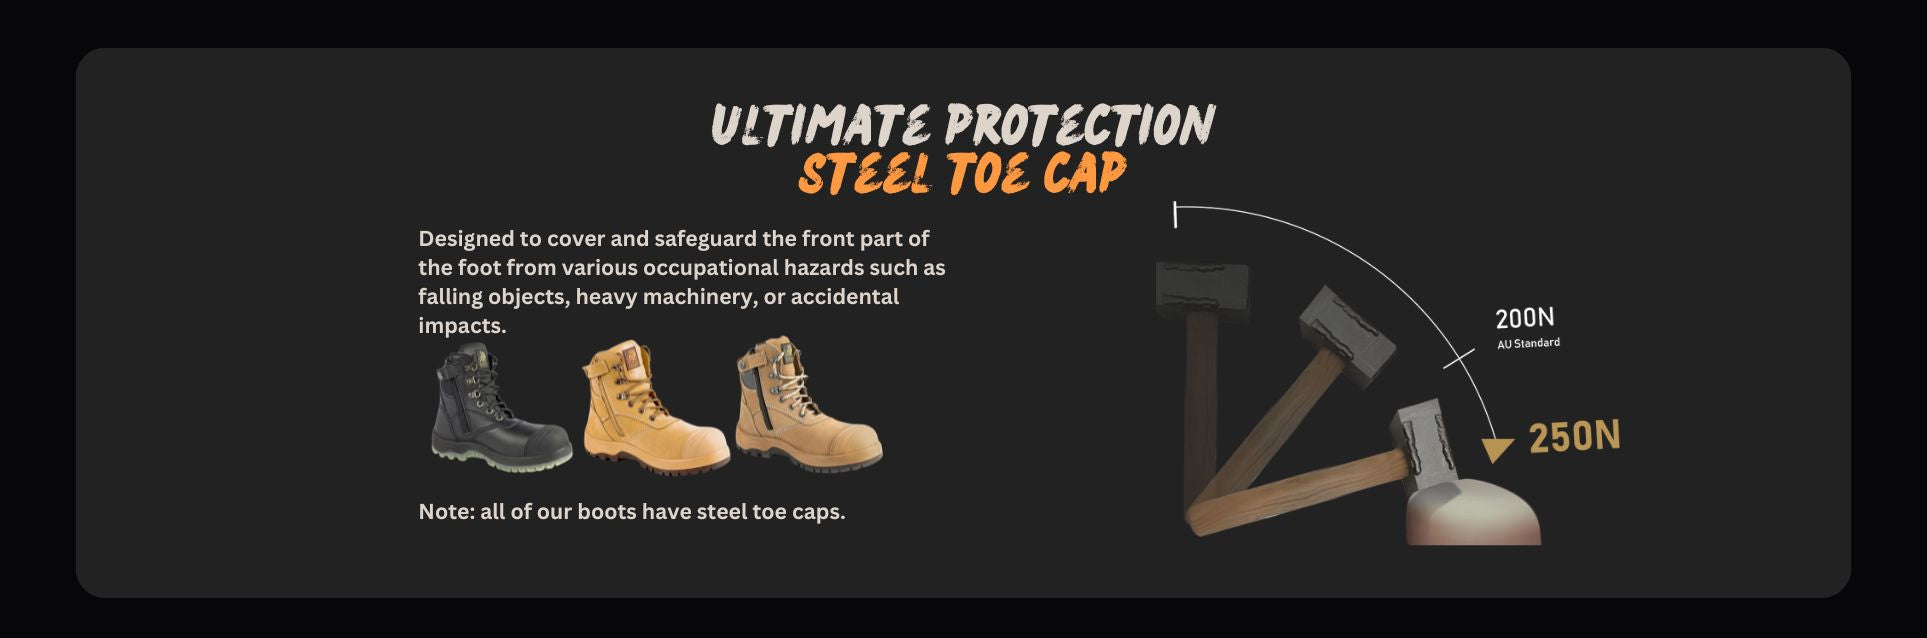 Canura boots has steel toe caps